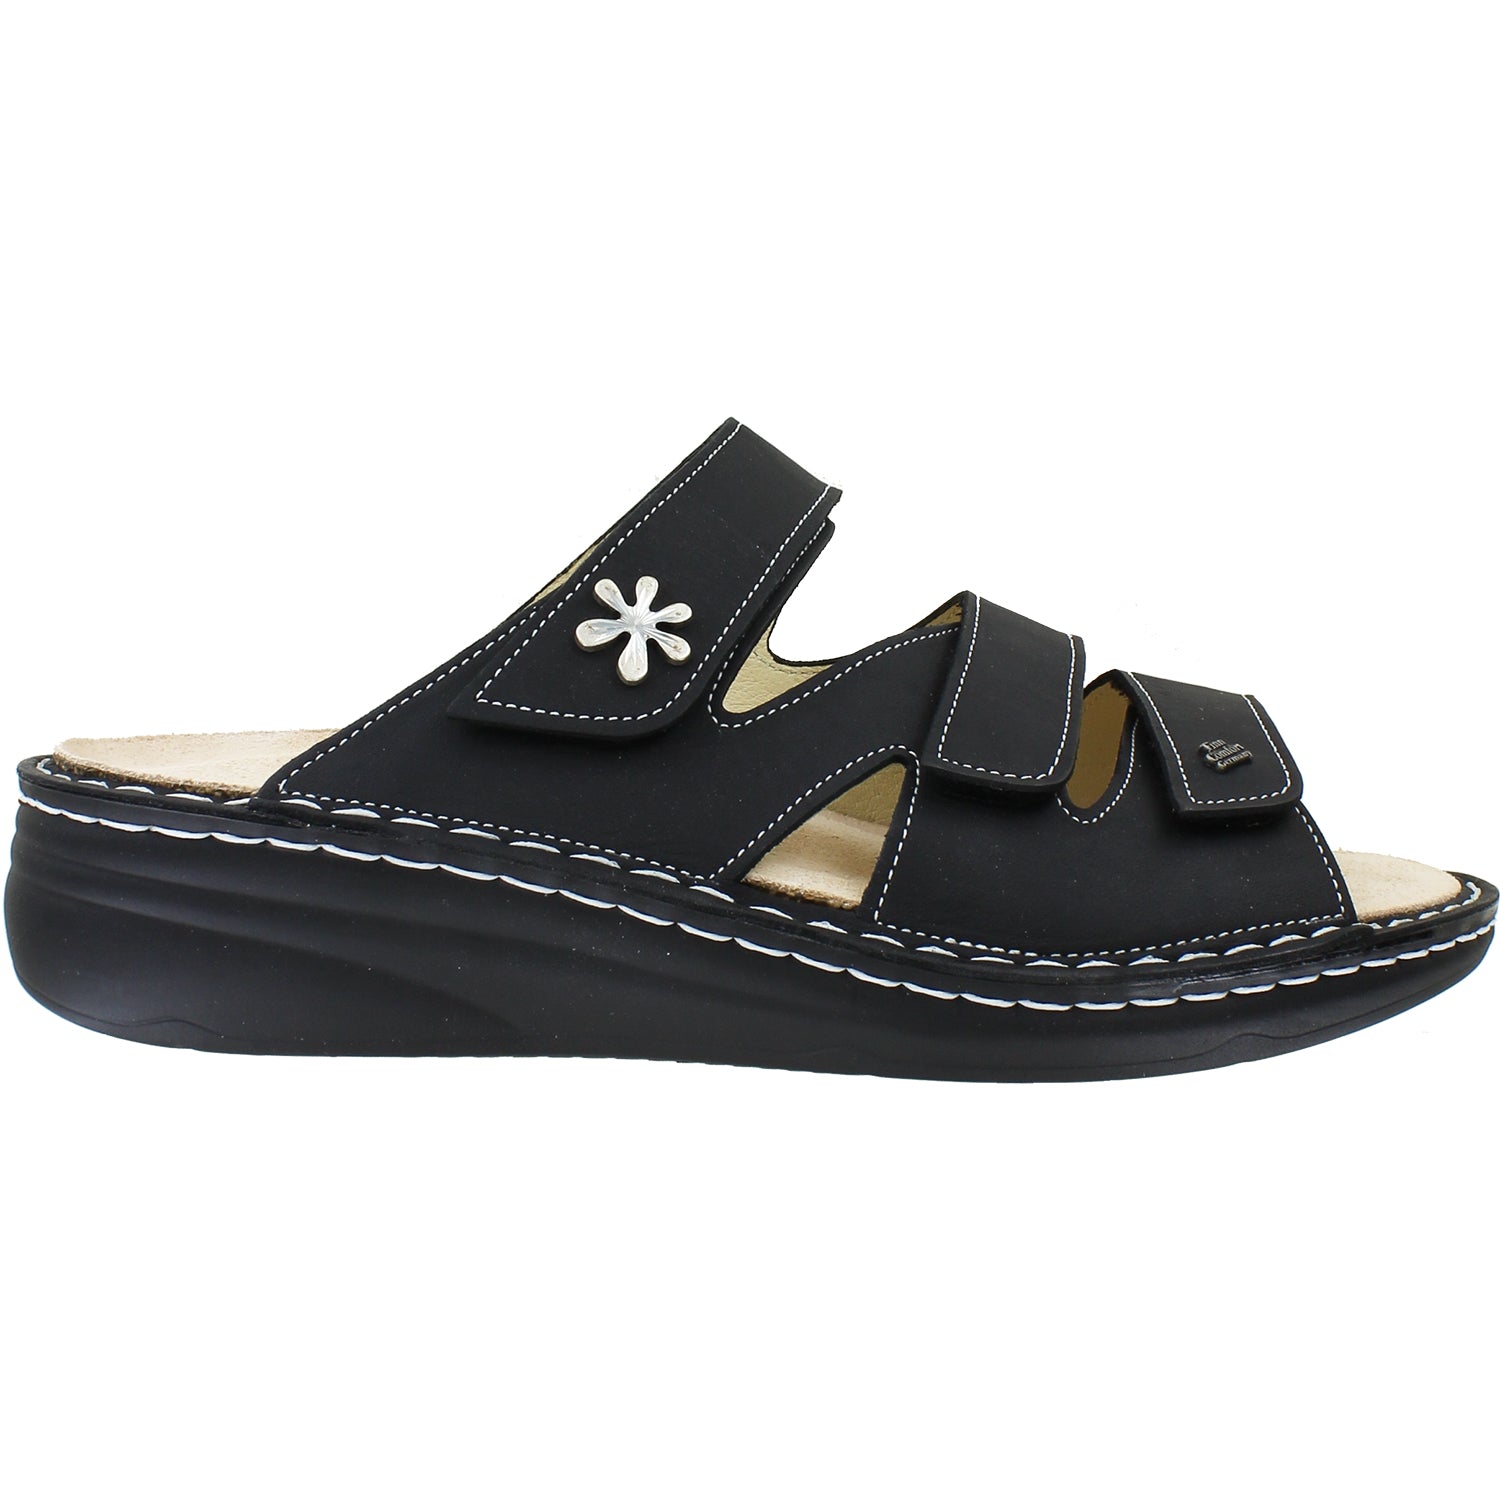 Finn Comfort Grenada Black | Women's Slide Sandals | Footwear etc.